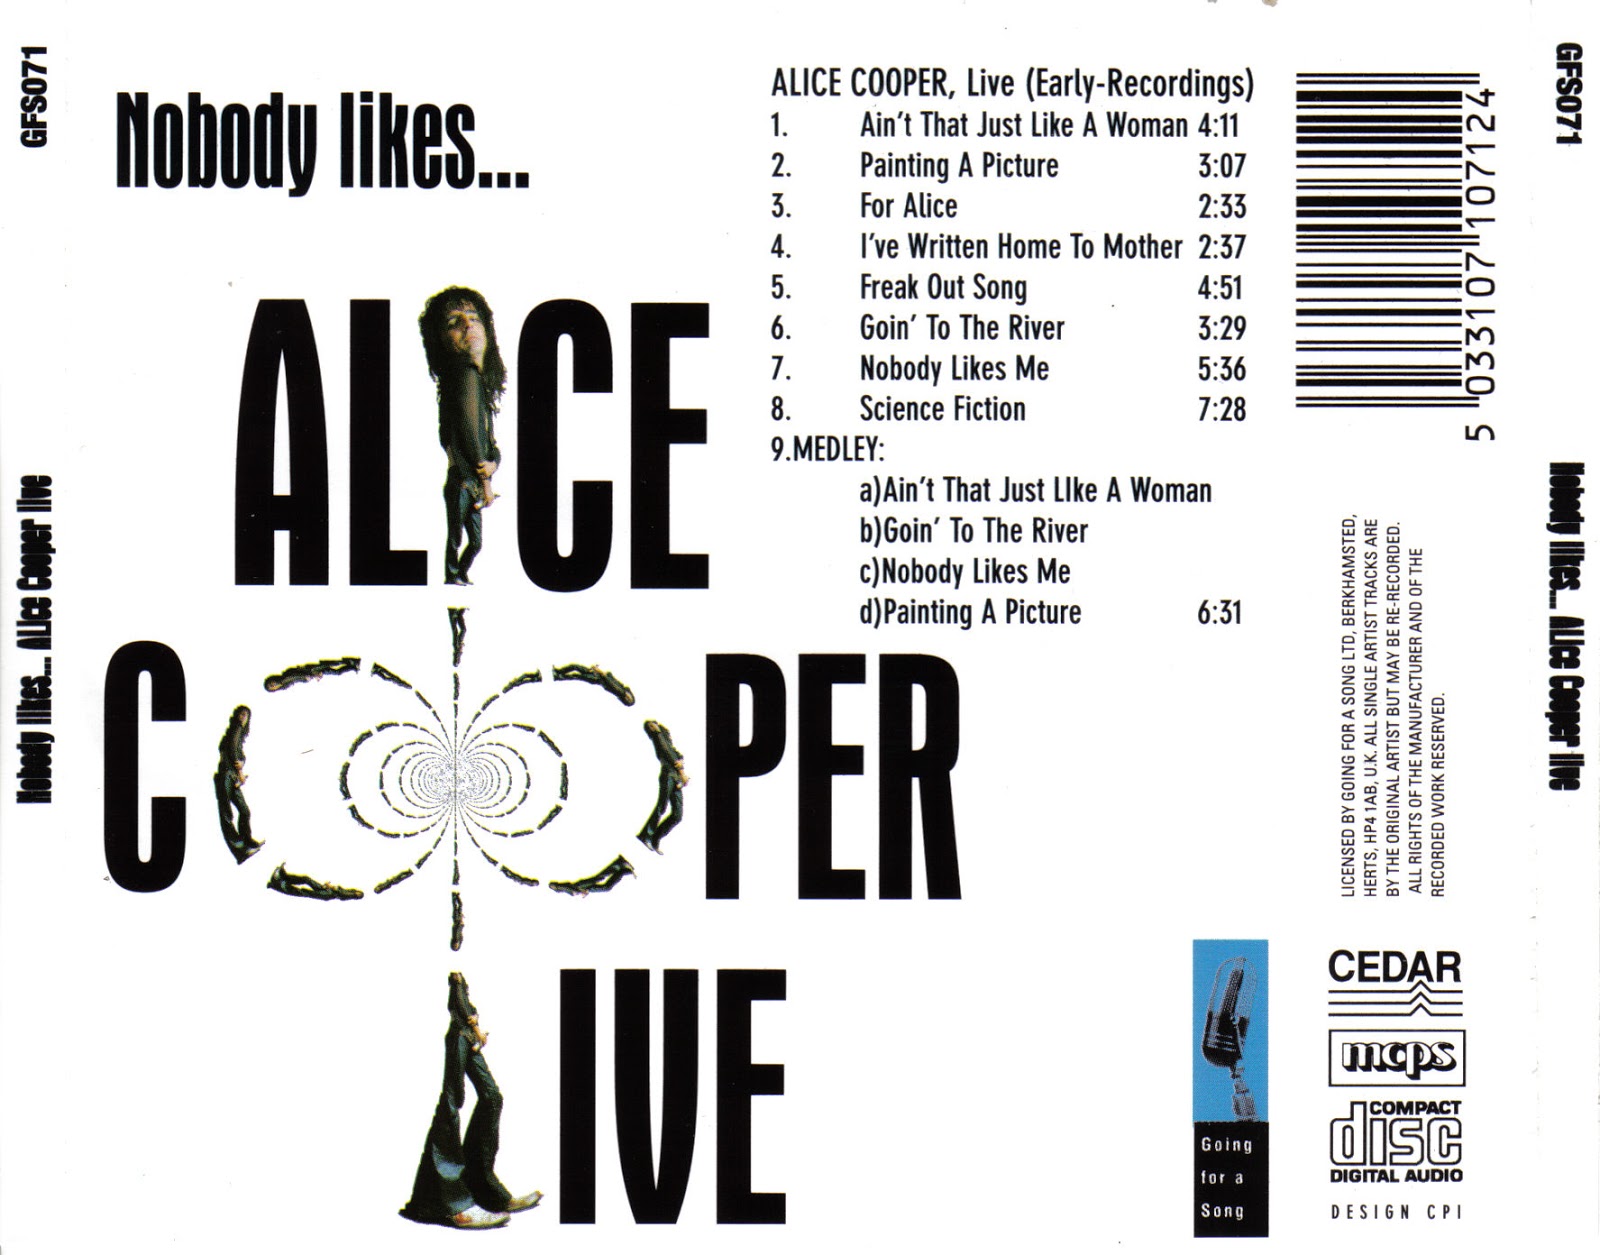 Reliquary Alice Cooper 19690913 Nobody Likes Alice